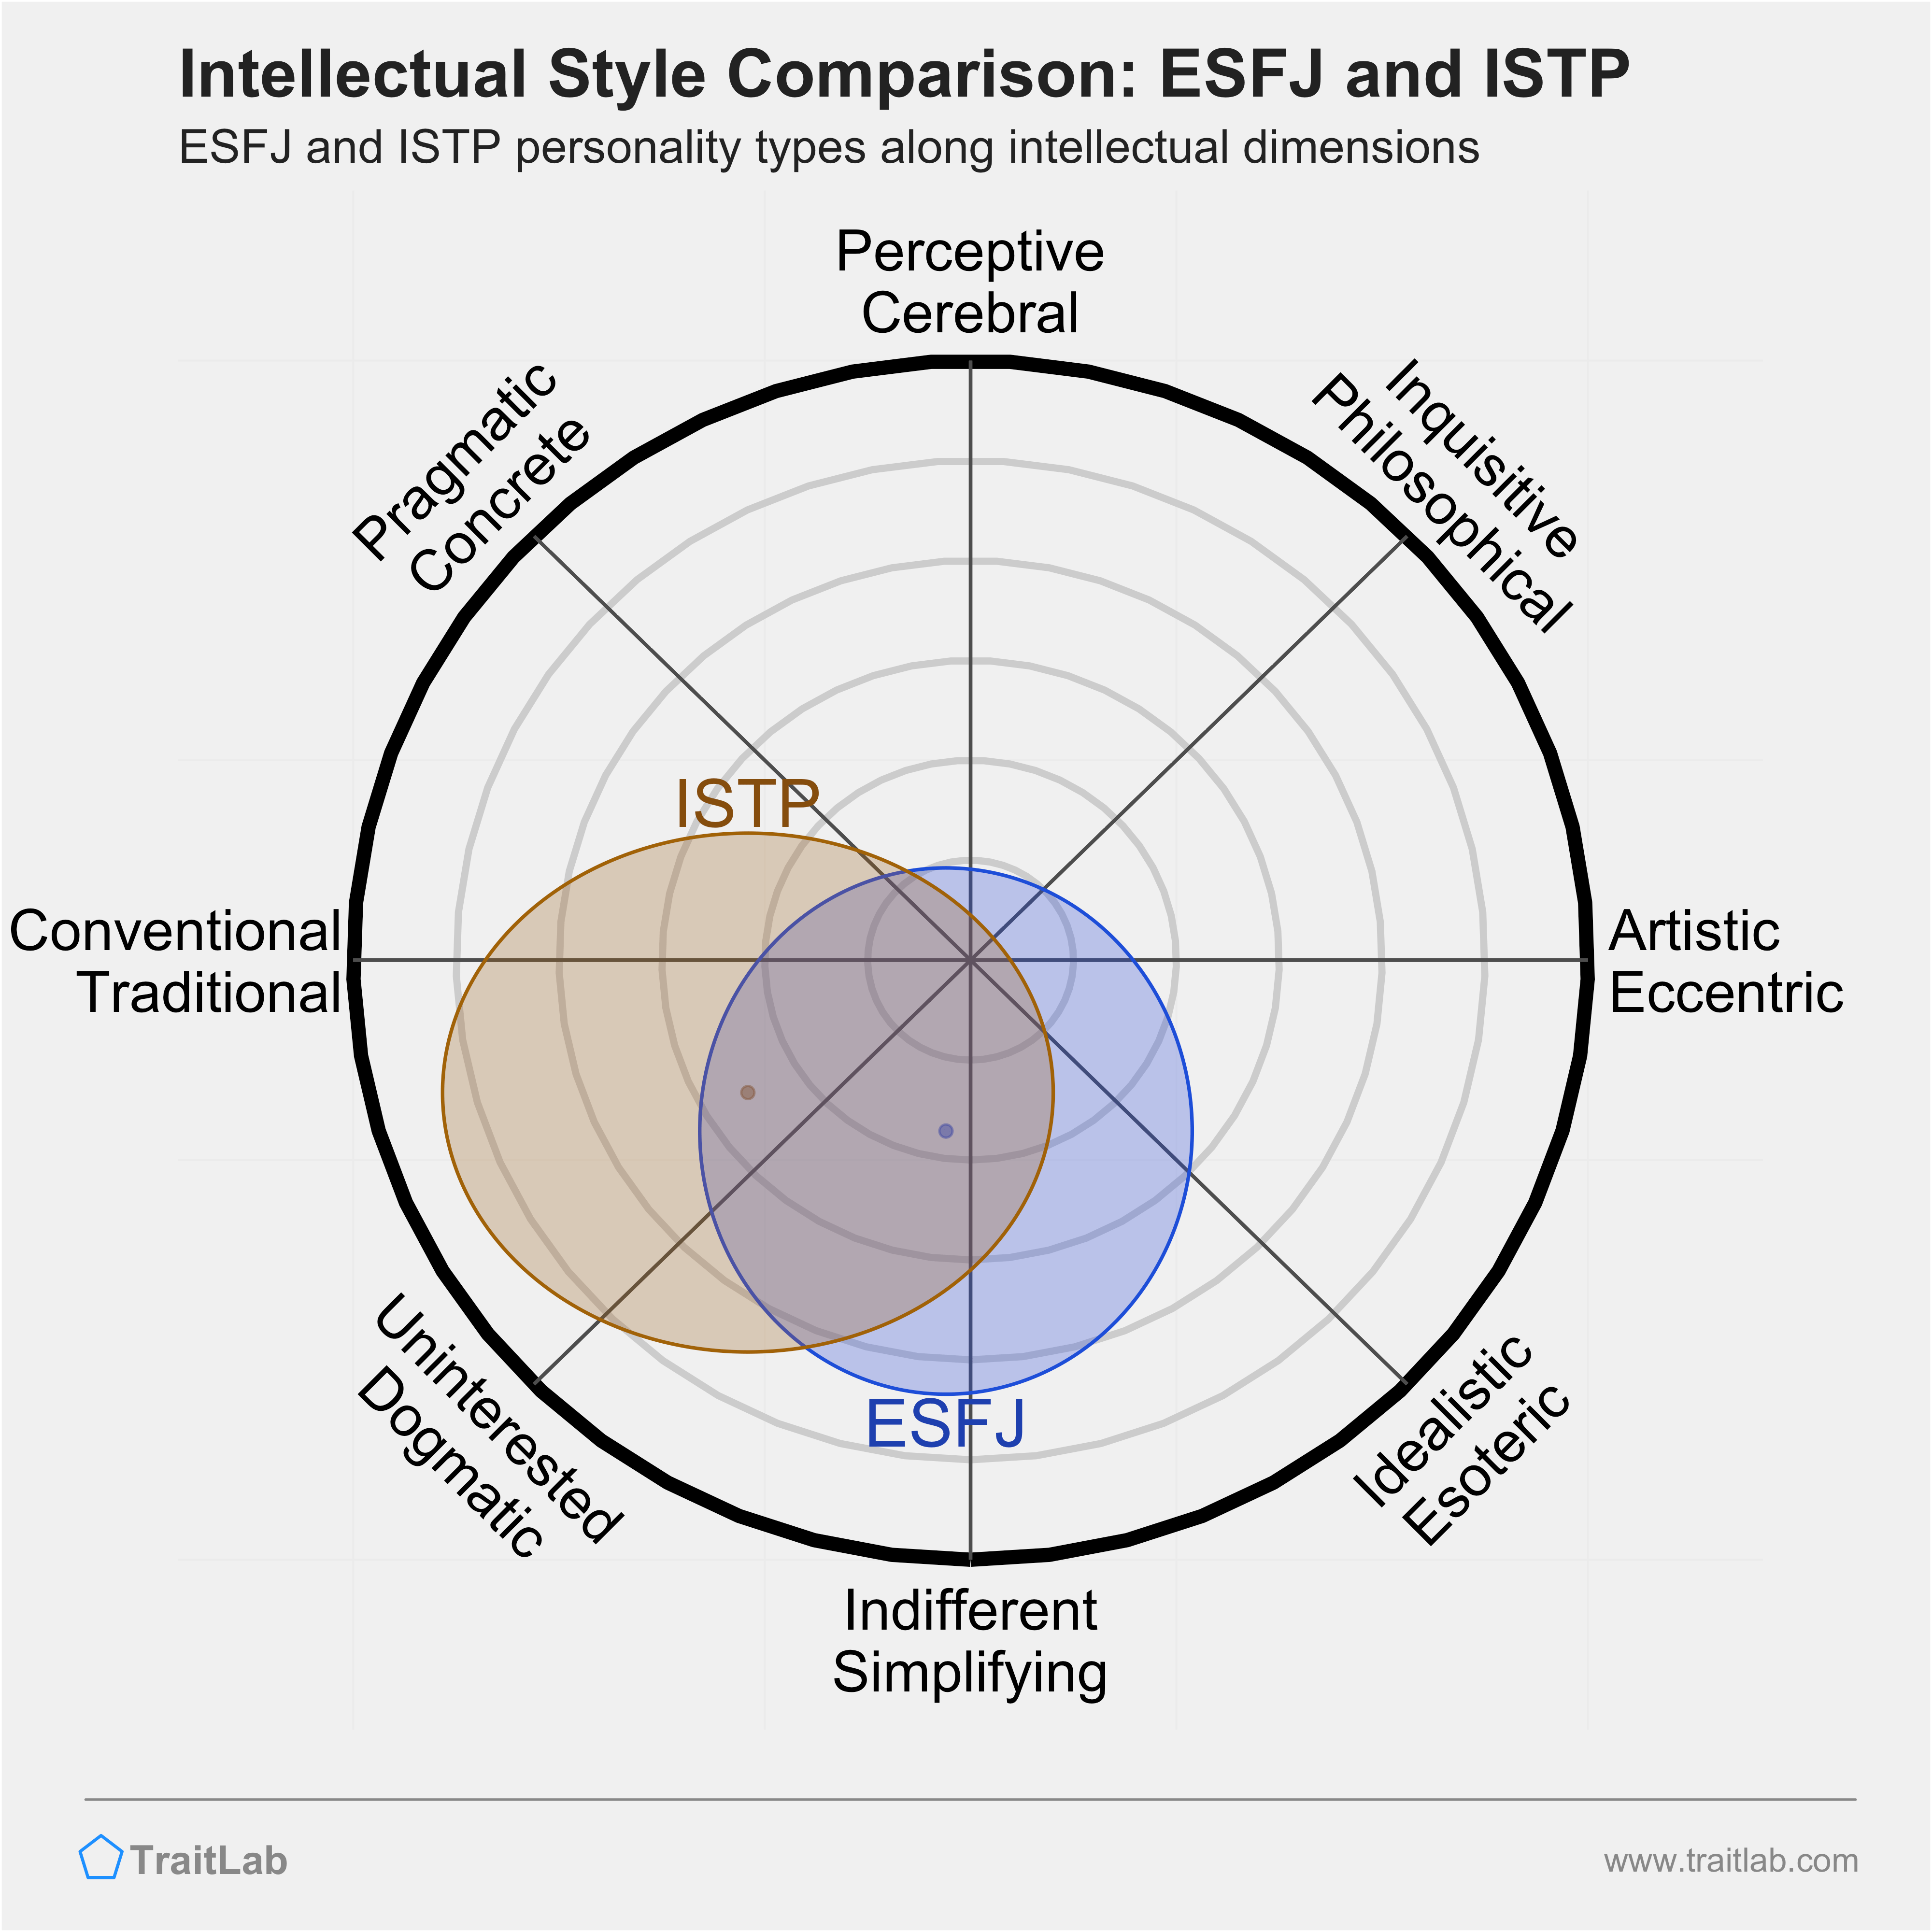 ESFJ and ISTP comparison across intellectual dimensions